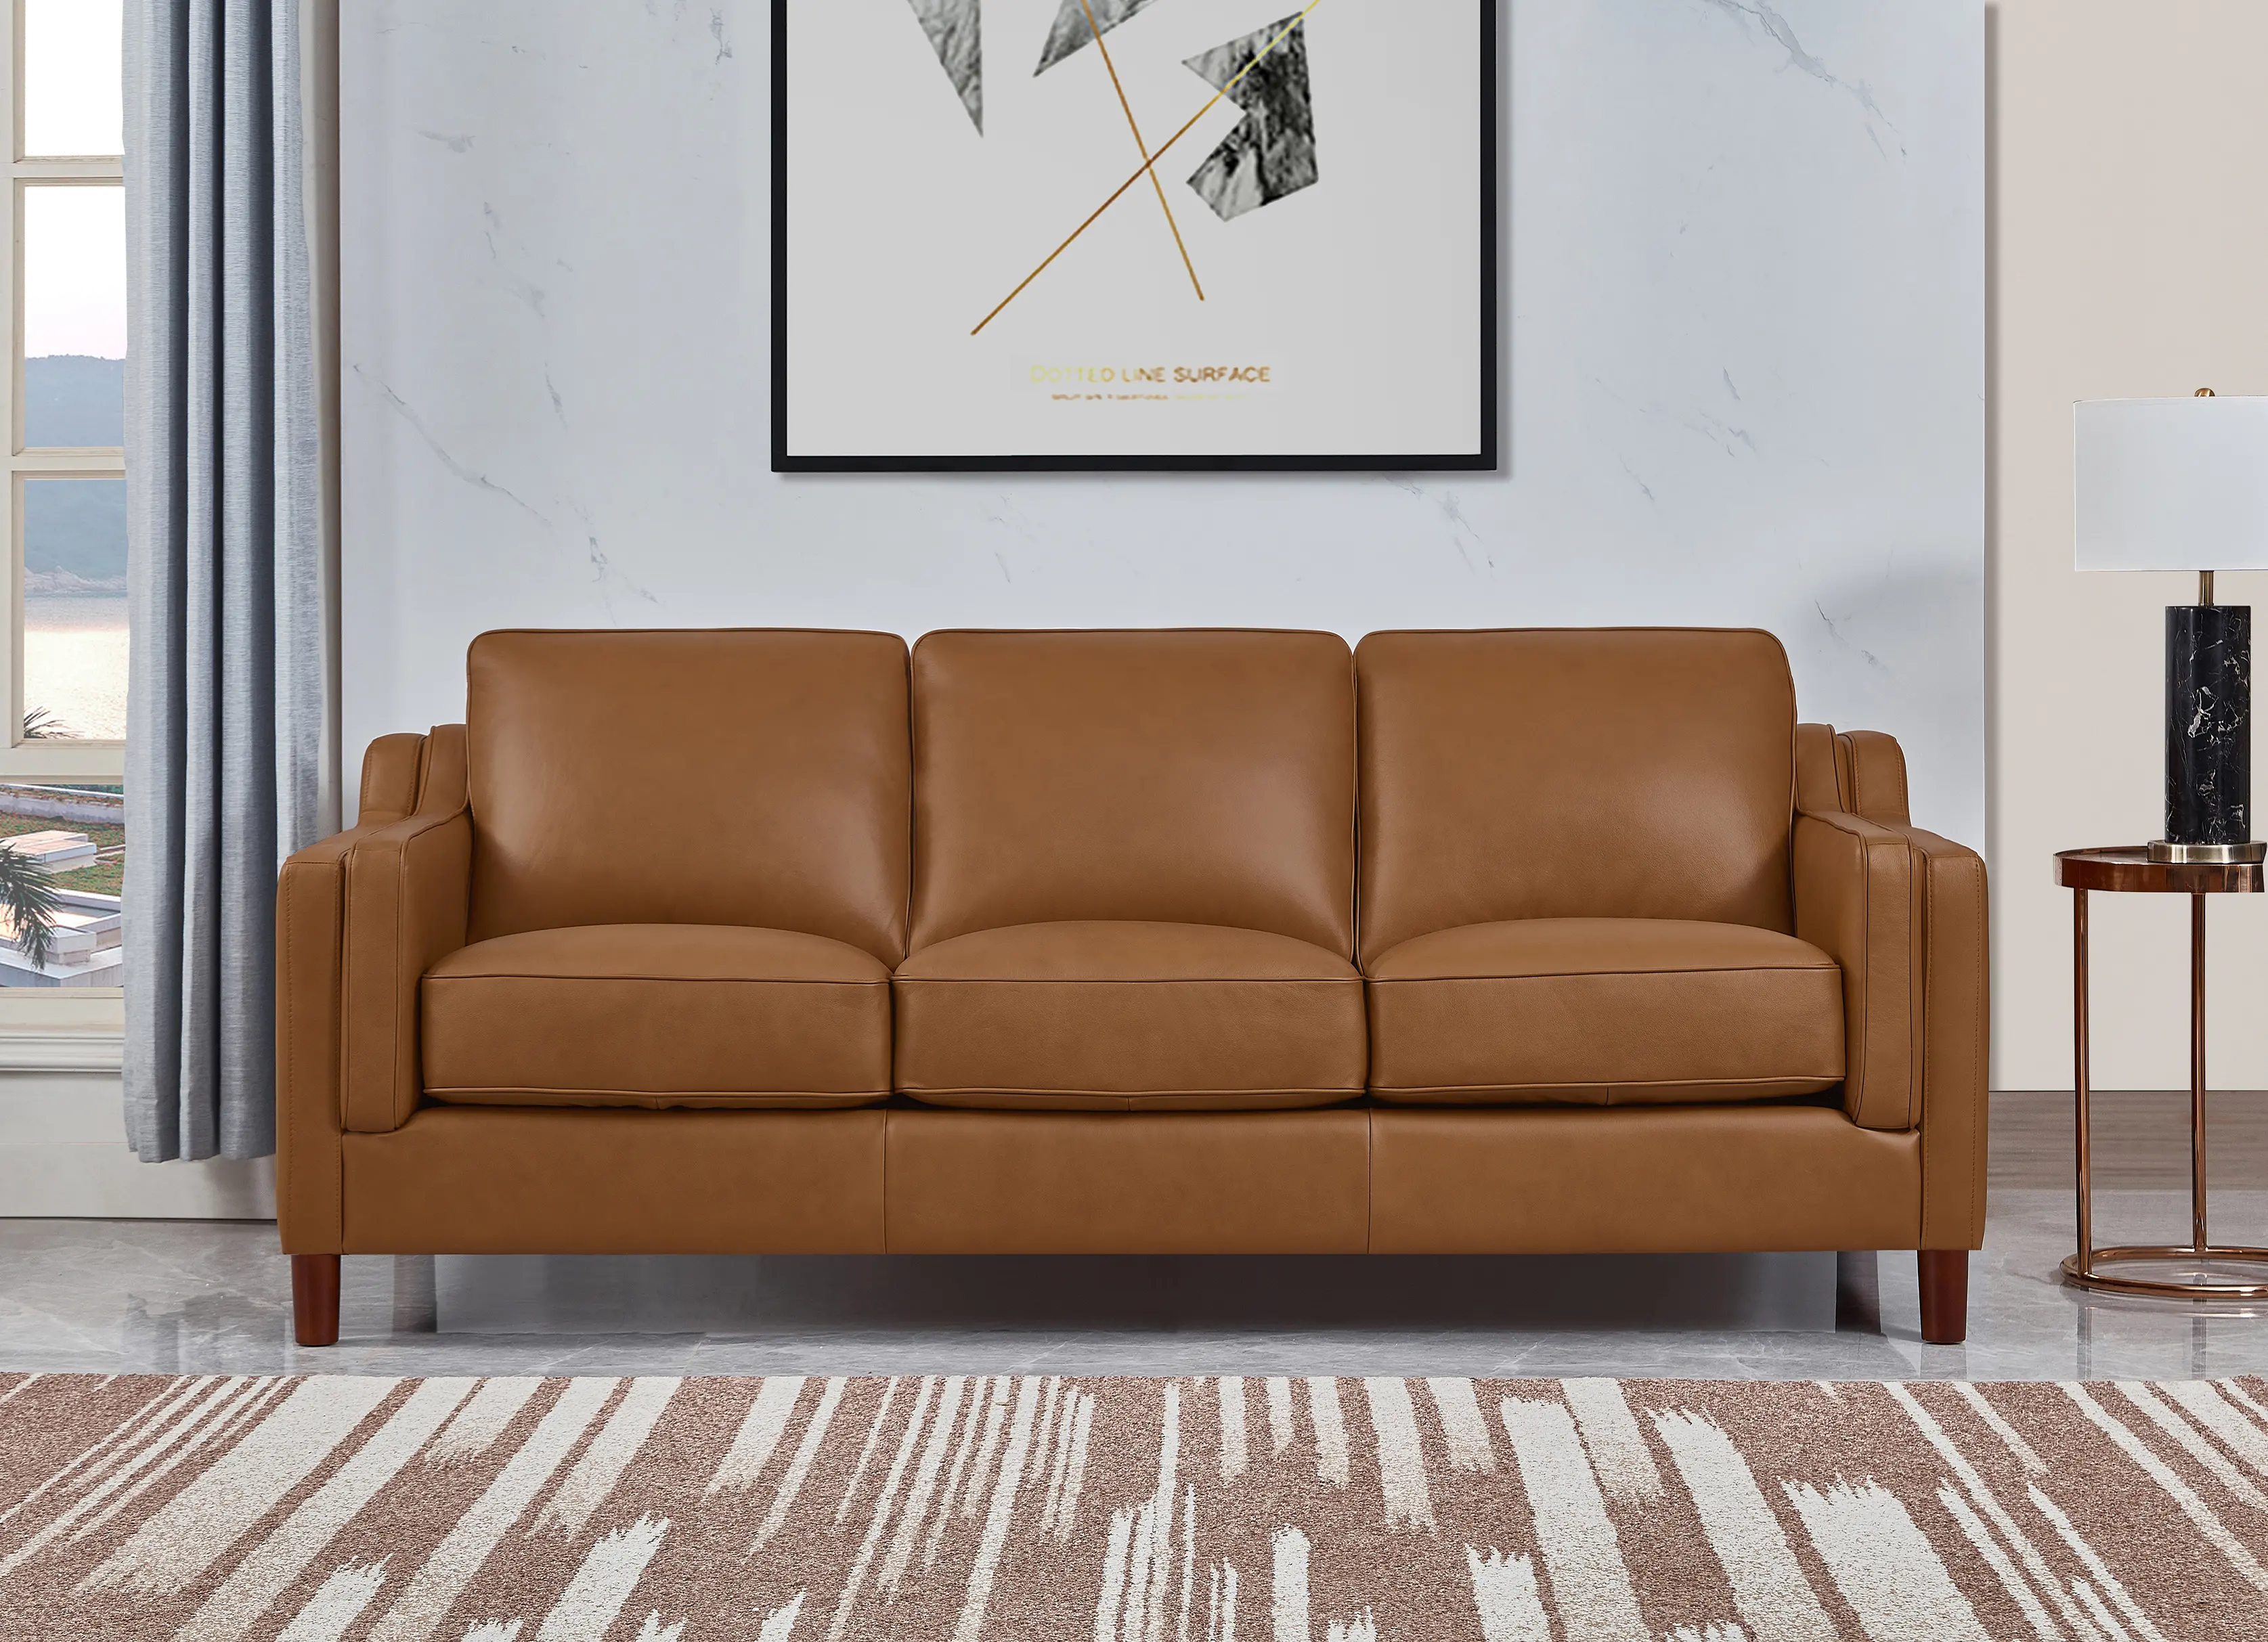 Ballari Cognac Brown Leather Sofa